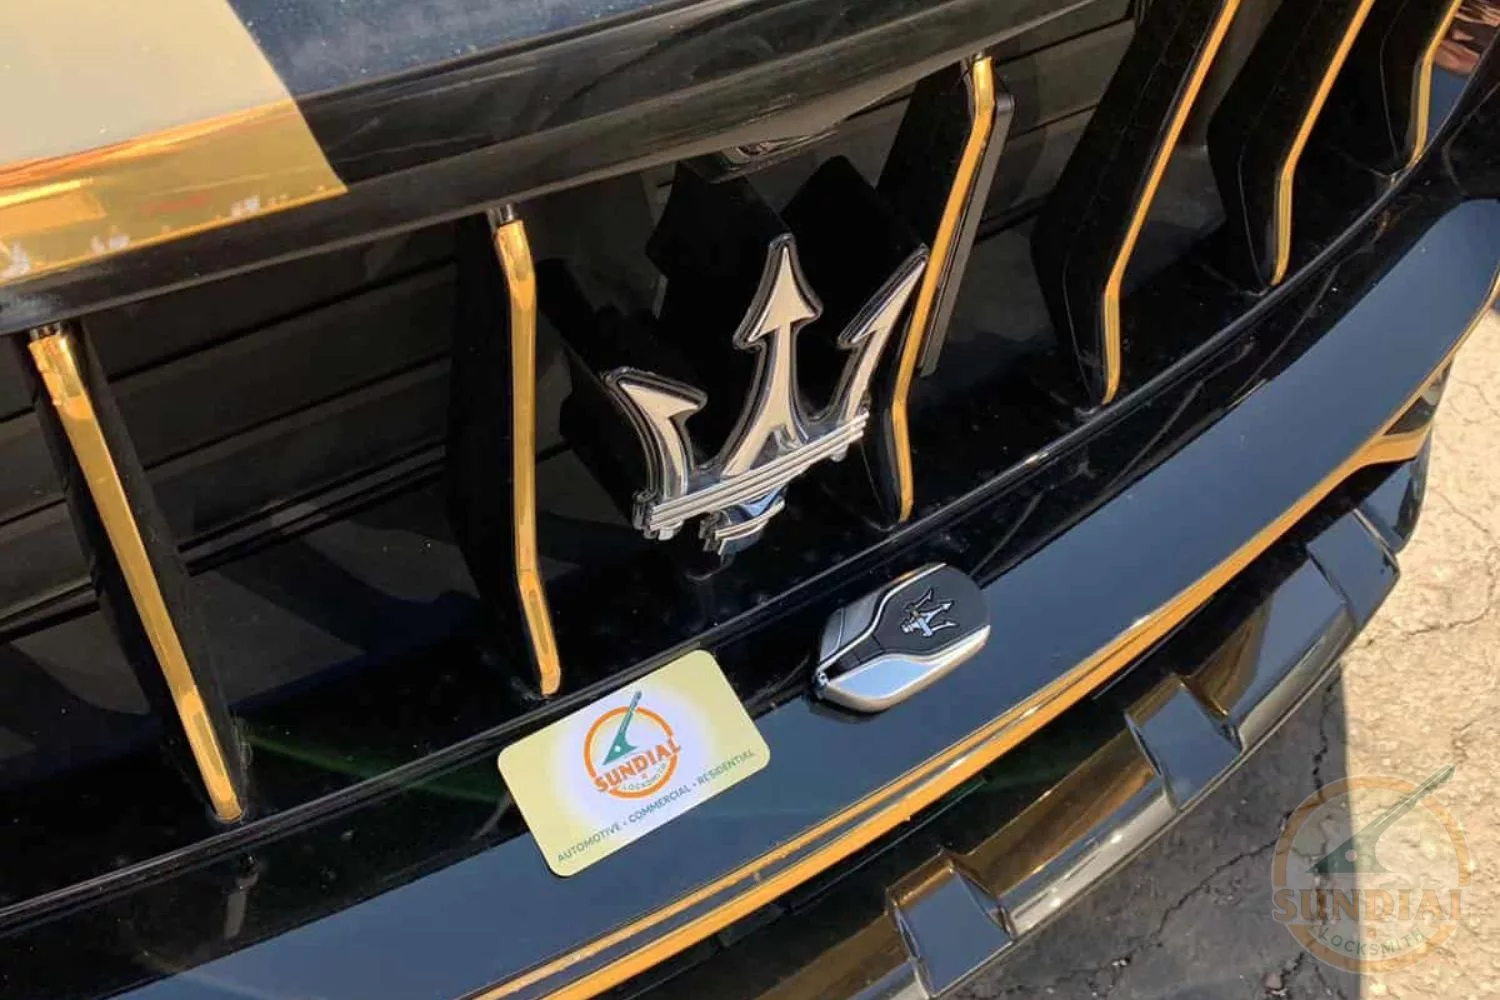 Car emblem close-up with black and gold details.